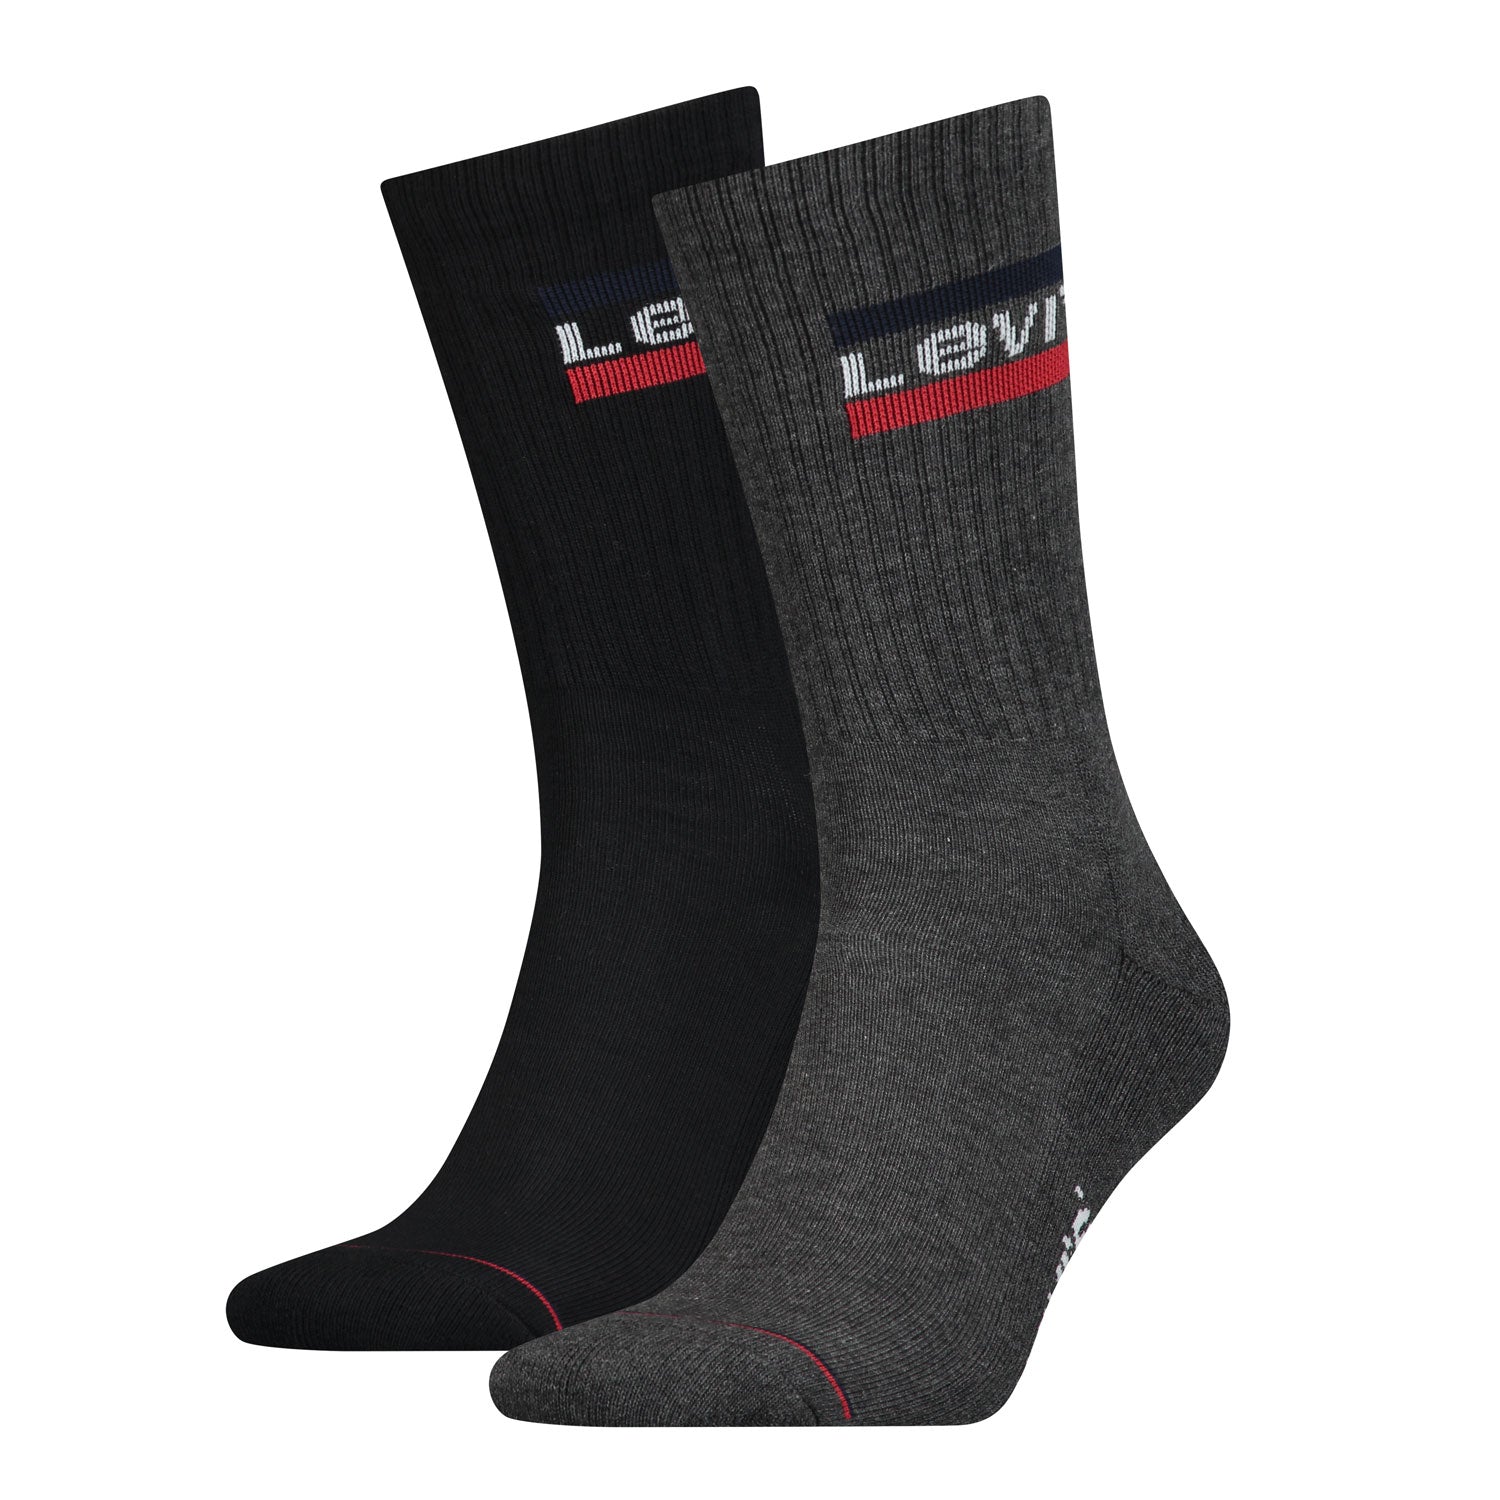 Levis Levis Regular Cut Sportswear Logo Socks - Grey/Black 1 Shaws Department Stores